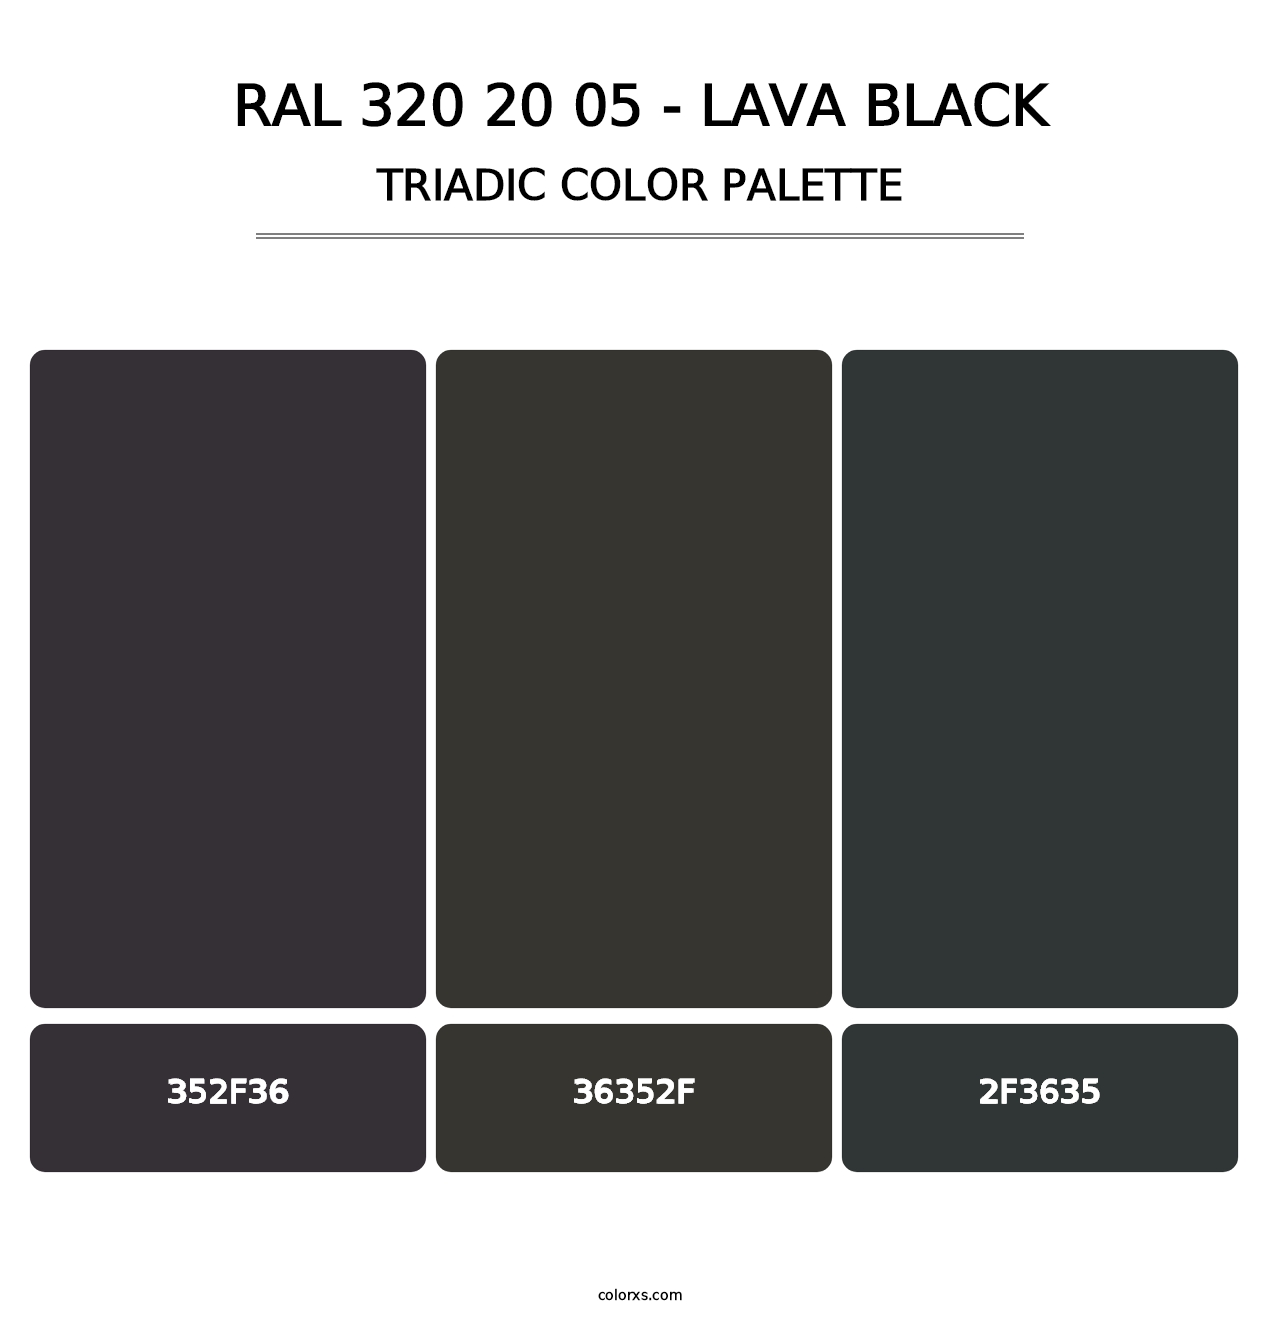 RAL 320 20 05 - Lava Black - Triadic Color Palette